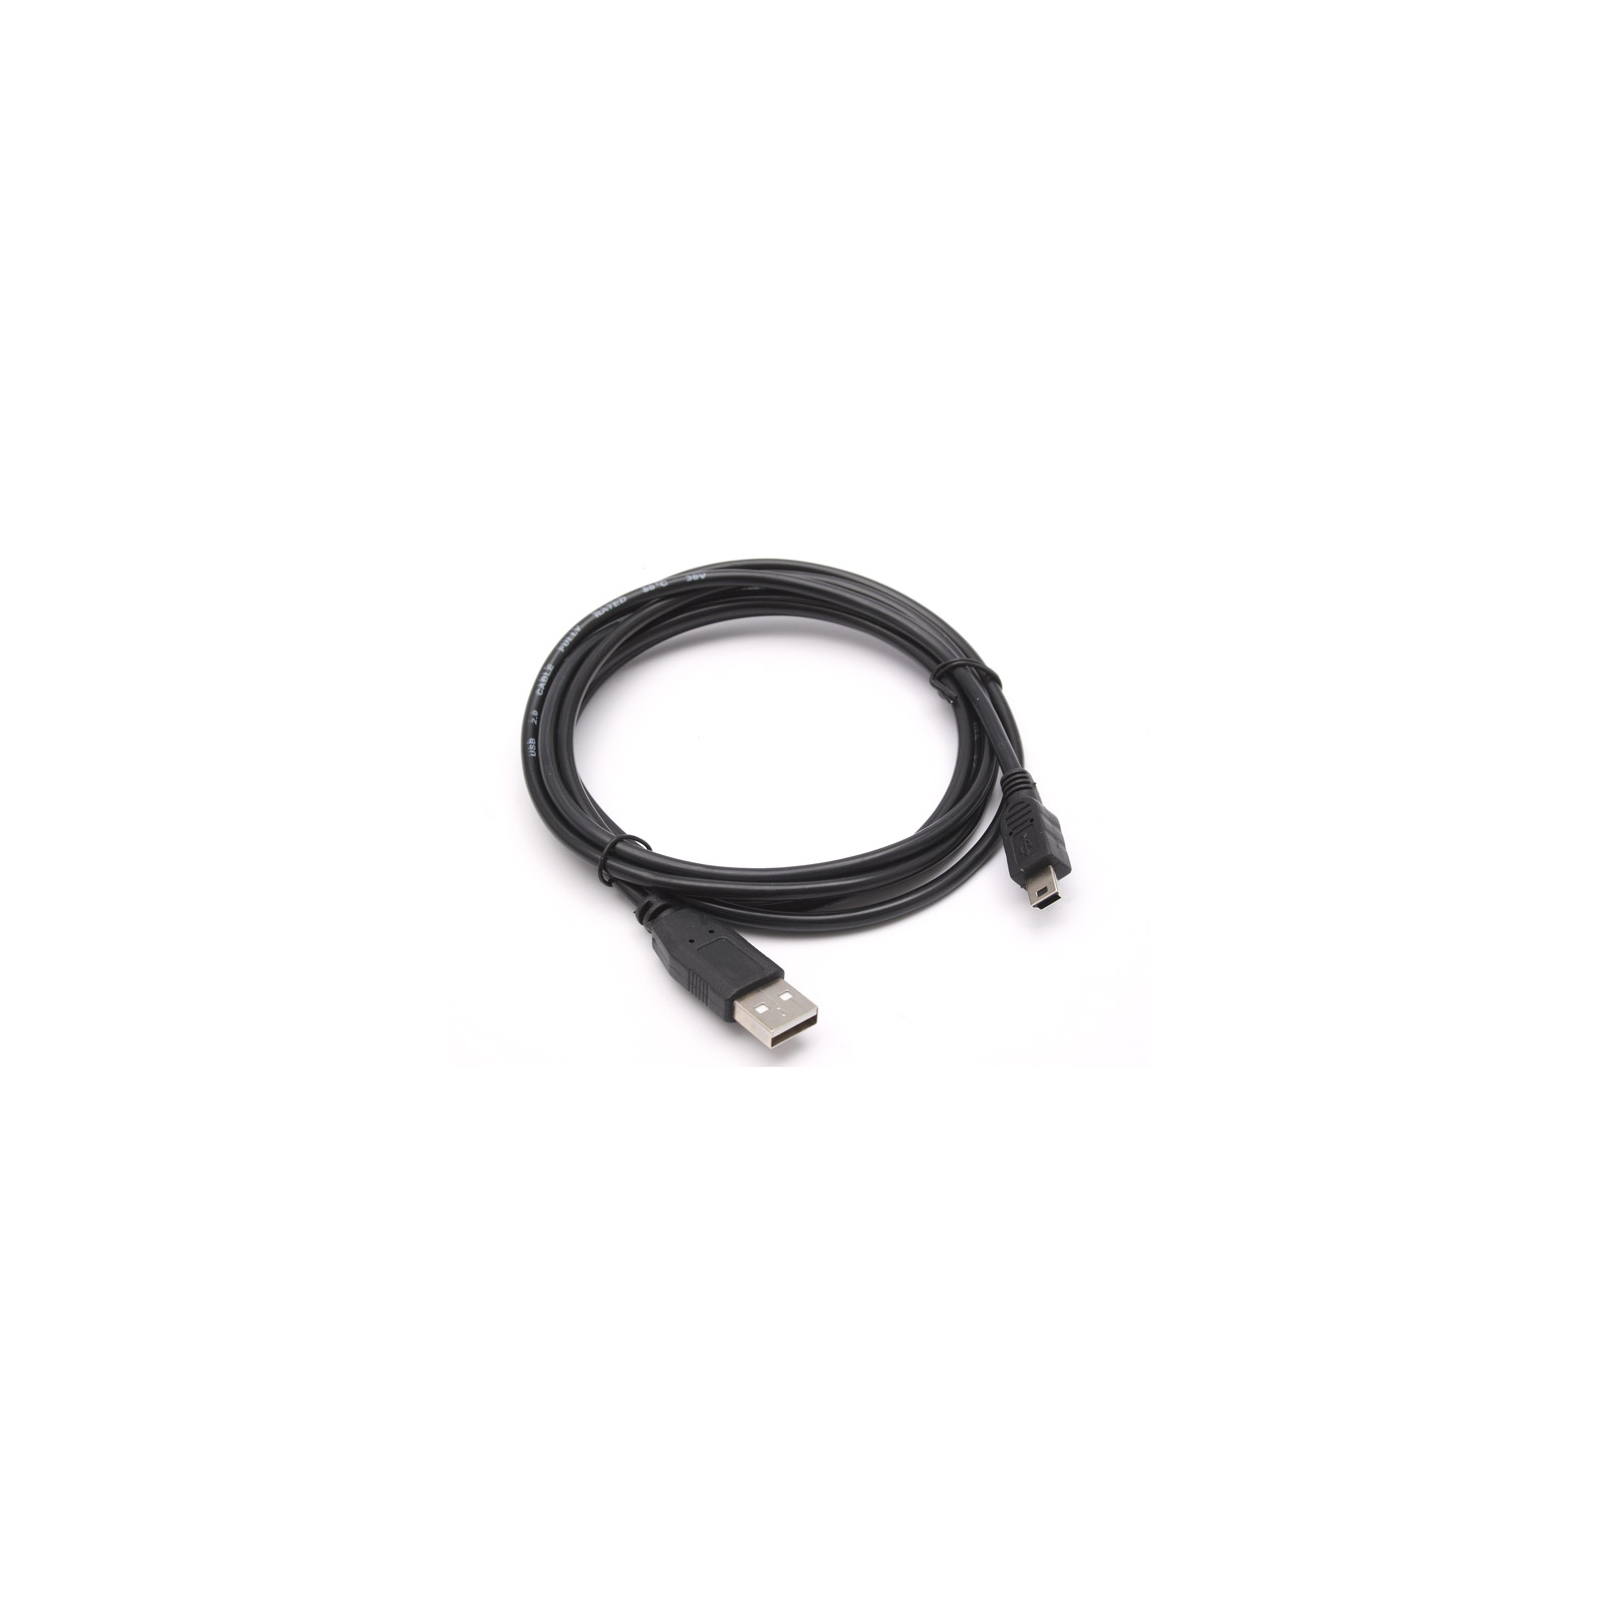 Дата кабель USB 2.0 AM to Mini 5P 1.8m Sven (453)